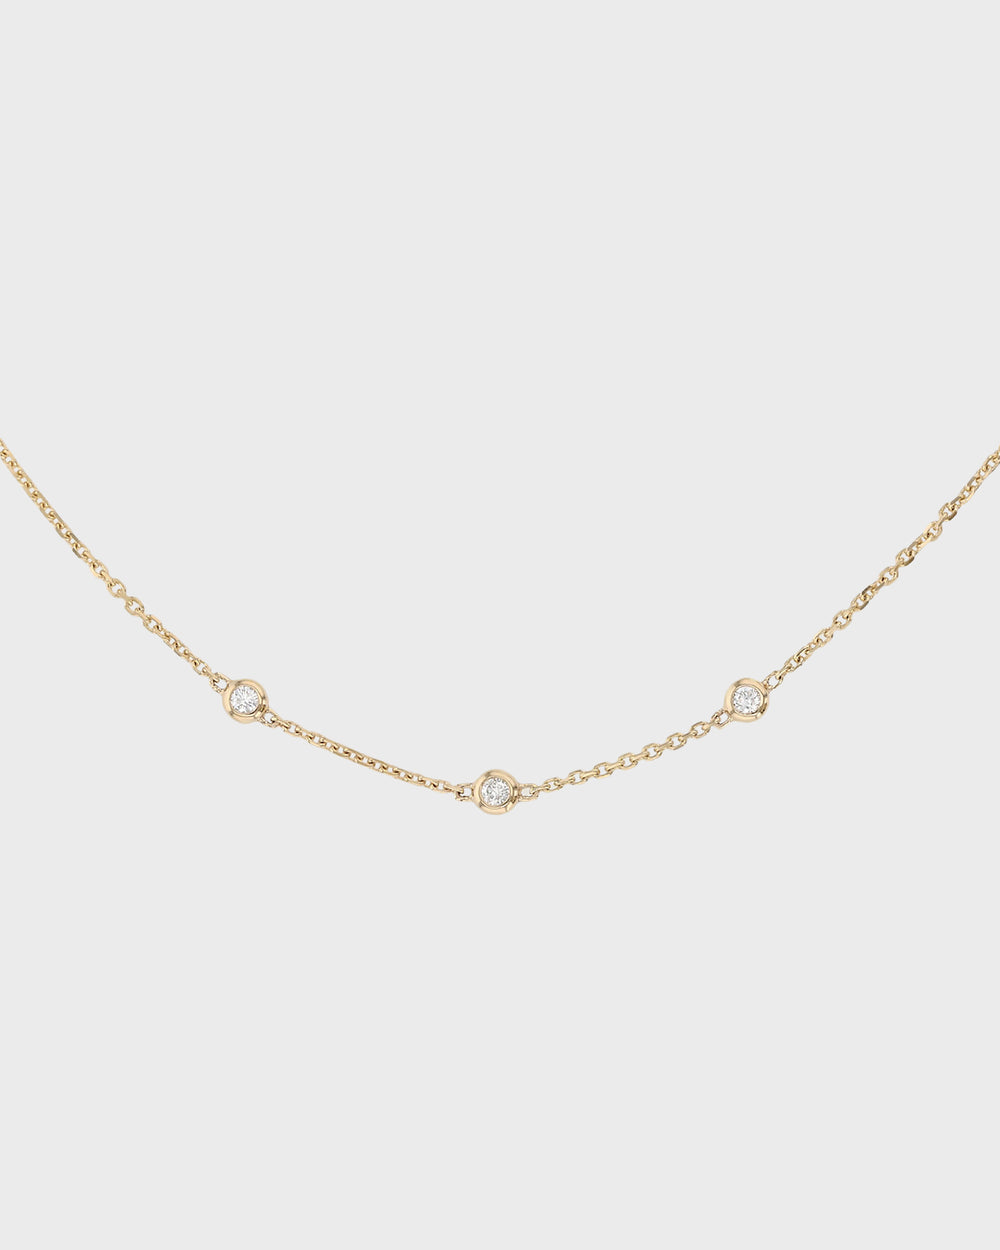 Tiny Lunette Necklace Gold | Sarah & Sebastian